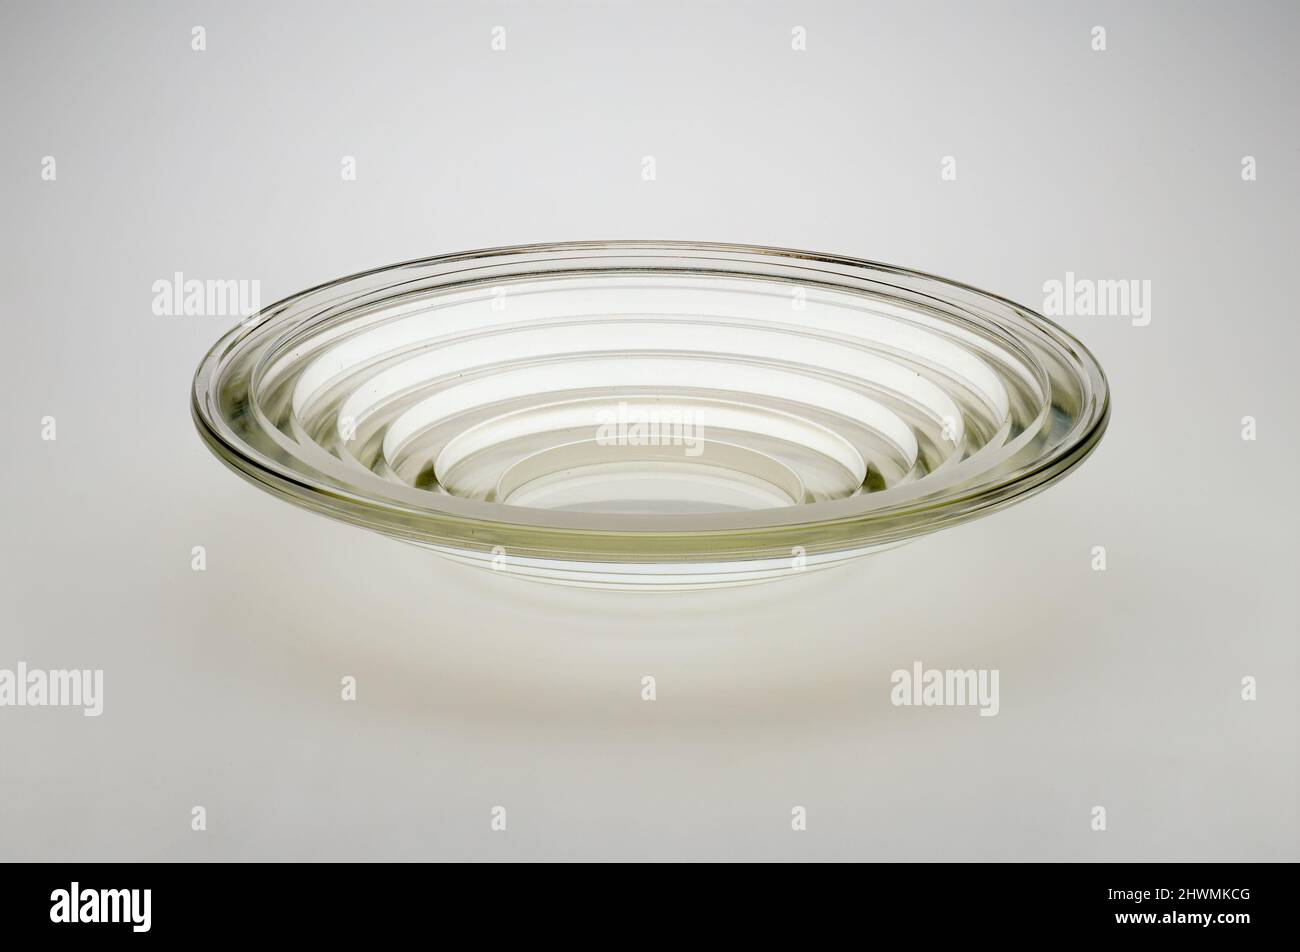 “Lens” Bowl. Designer: Walter Dorwin Teague, American, 1883–1960Designer form: Charles F Houghton, American, 1846–1897Manufacturer: Steuben Division, Corning Glass Works, American, 1918–1933 Stock Photo